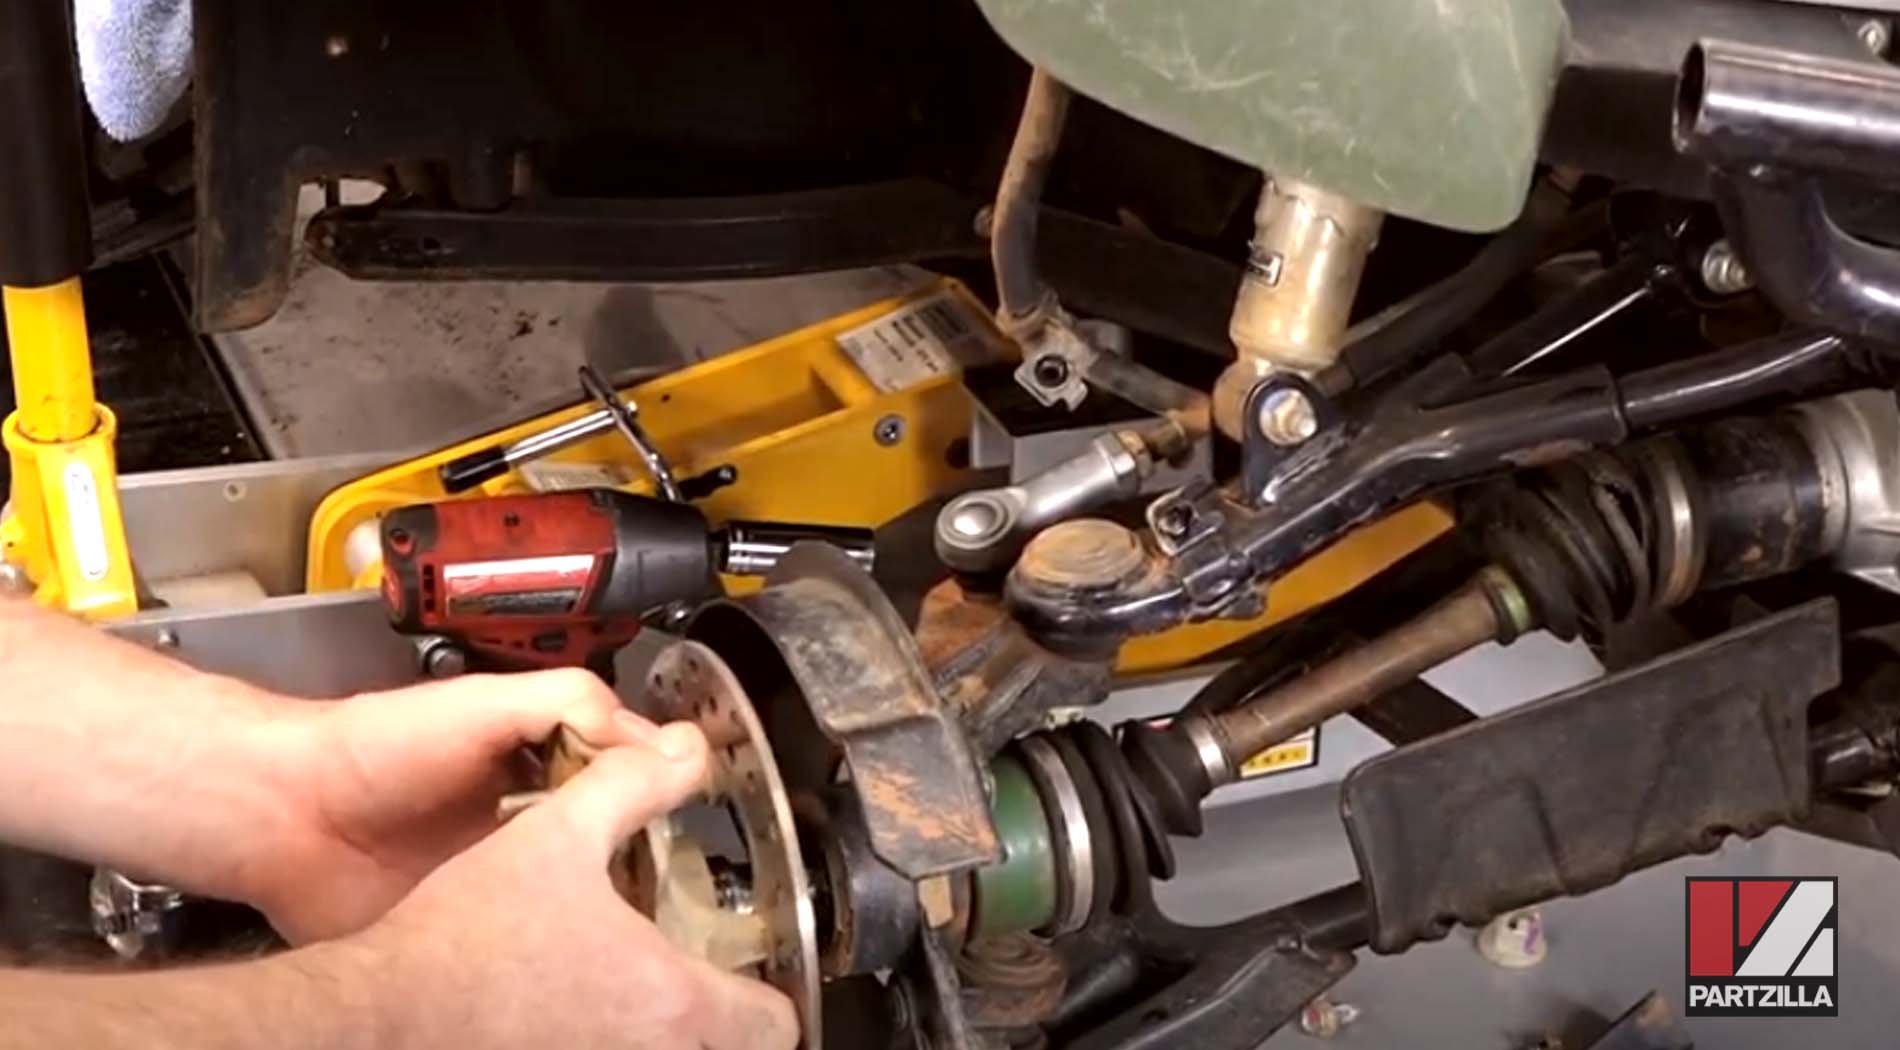 Honda Rancher 420 ATV wheel bearing replacement